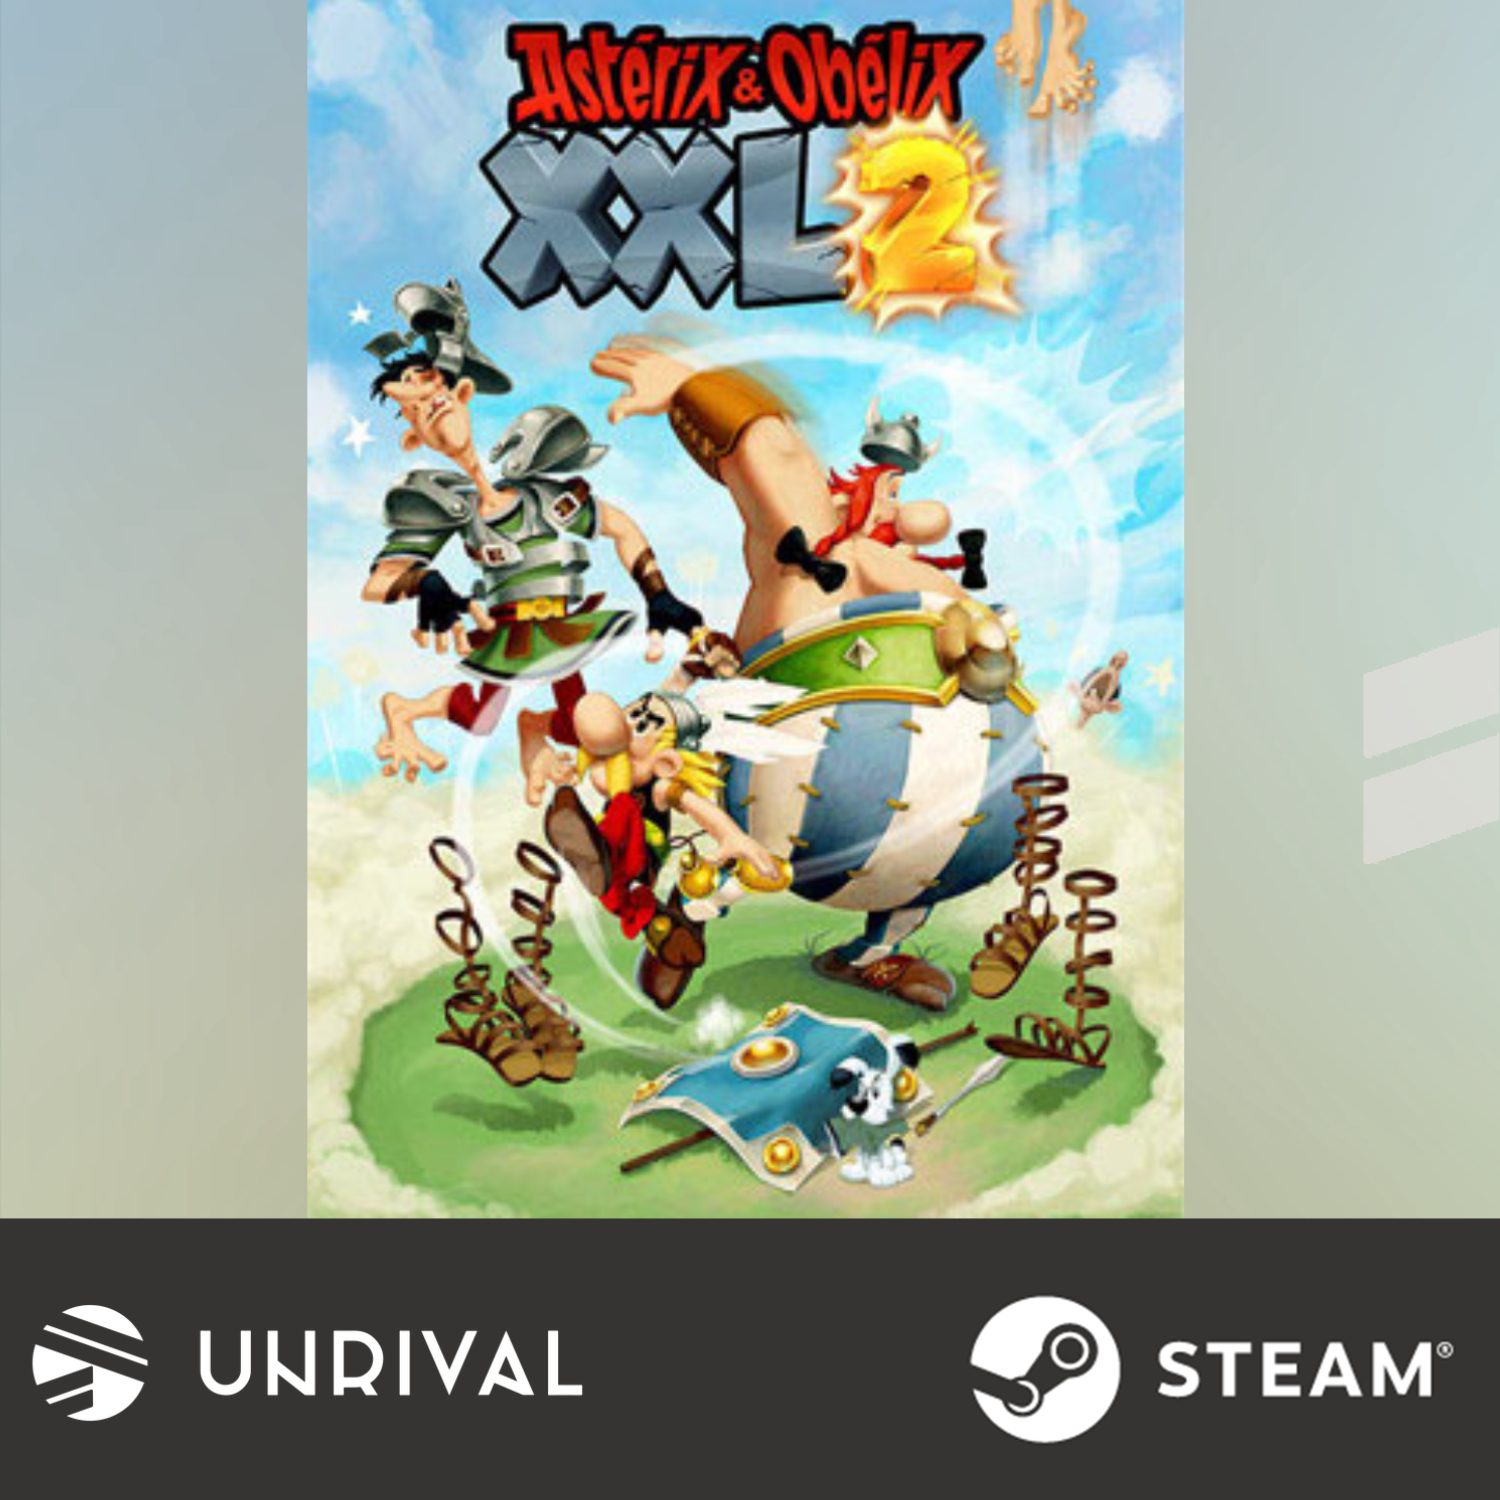 [Hot Sale] Asterix & Obelix XXL 2 PC Digital Download Game - Unrival